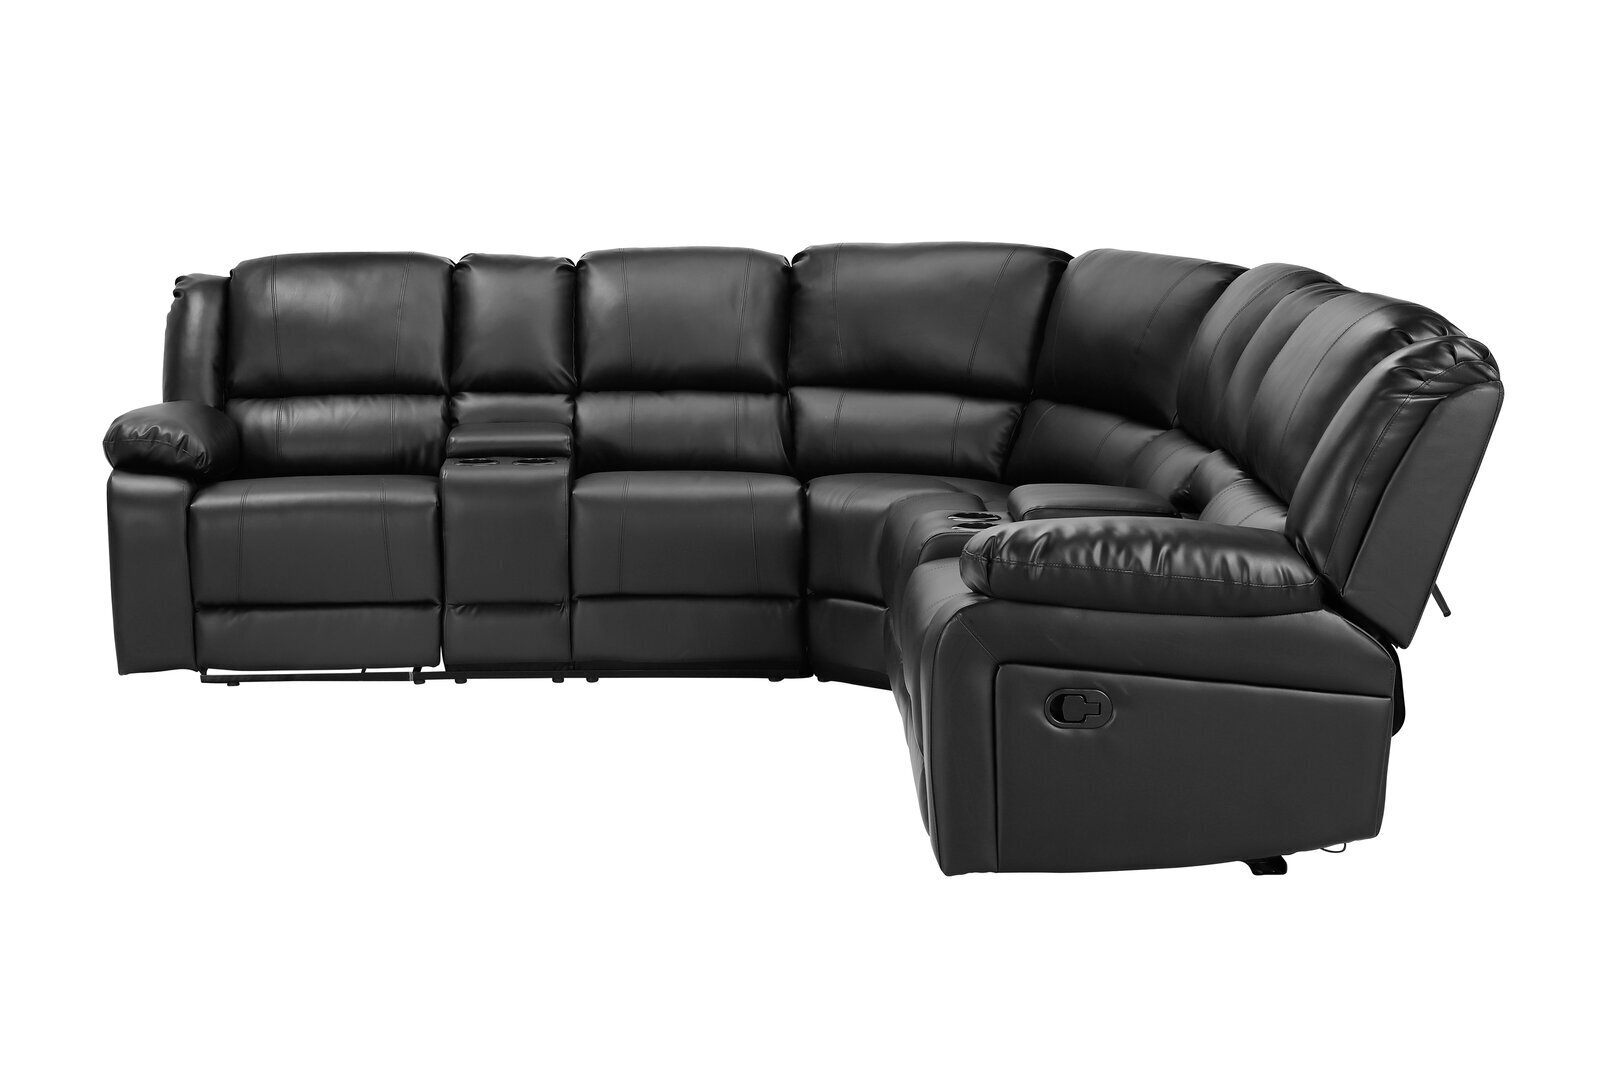 Classic Reclining Sofa Chaise